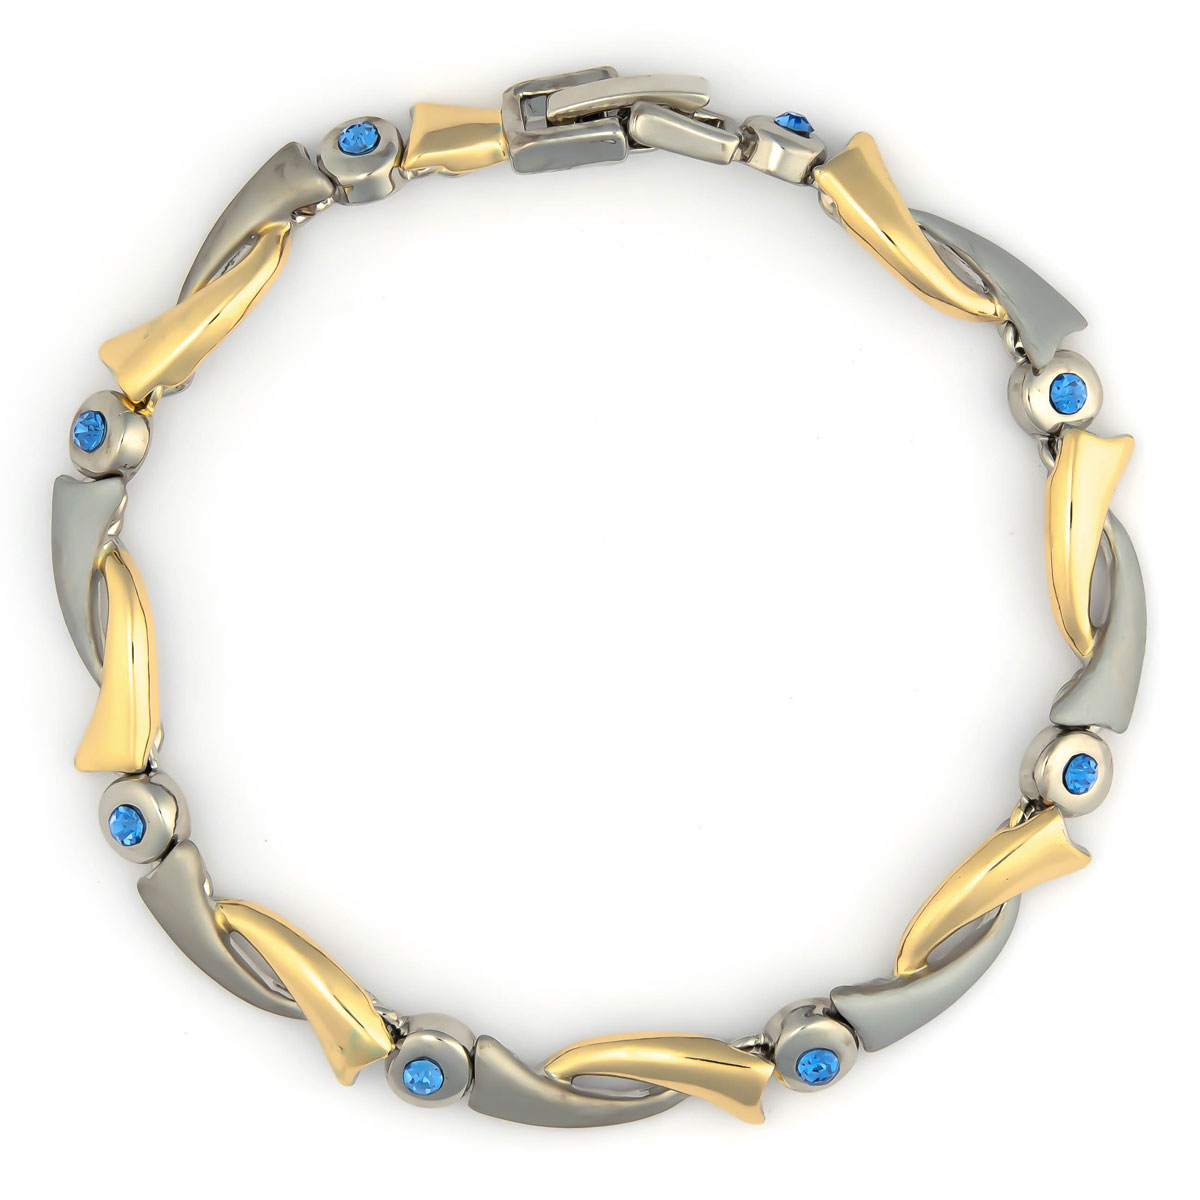 K.V. Fuchs Design Schmuck Damen Armband in bicolor-gold-silber mit Zirkonia in blau »A-22-33«